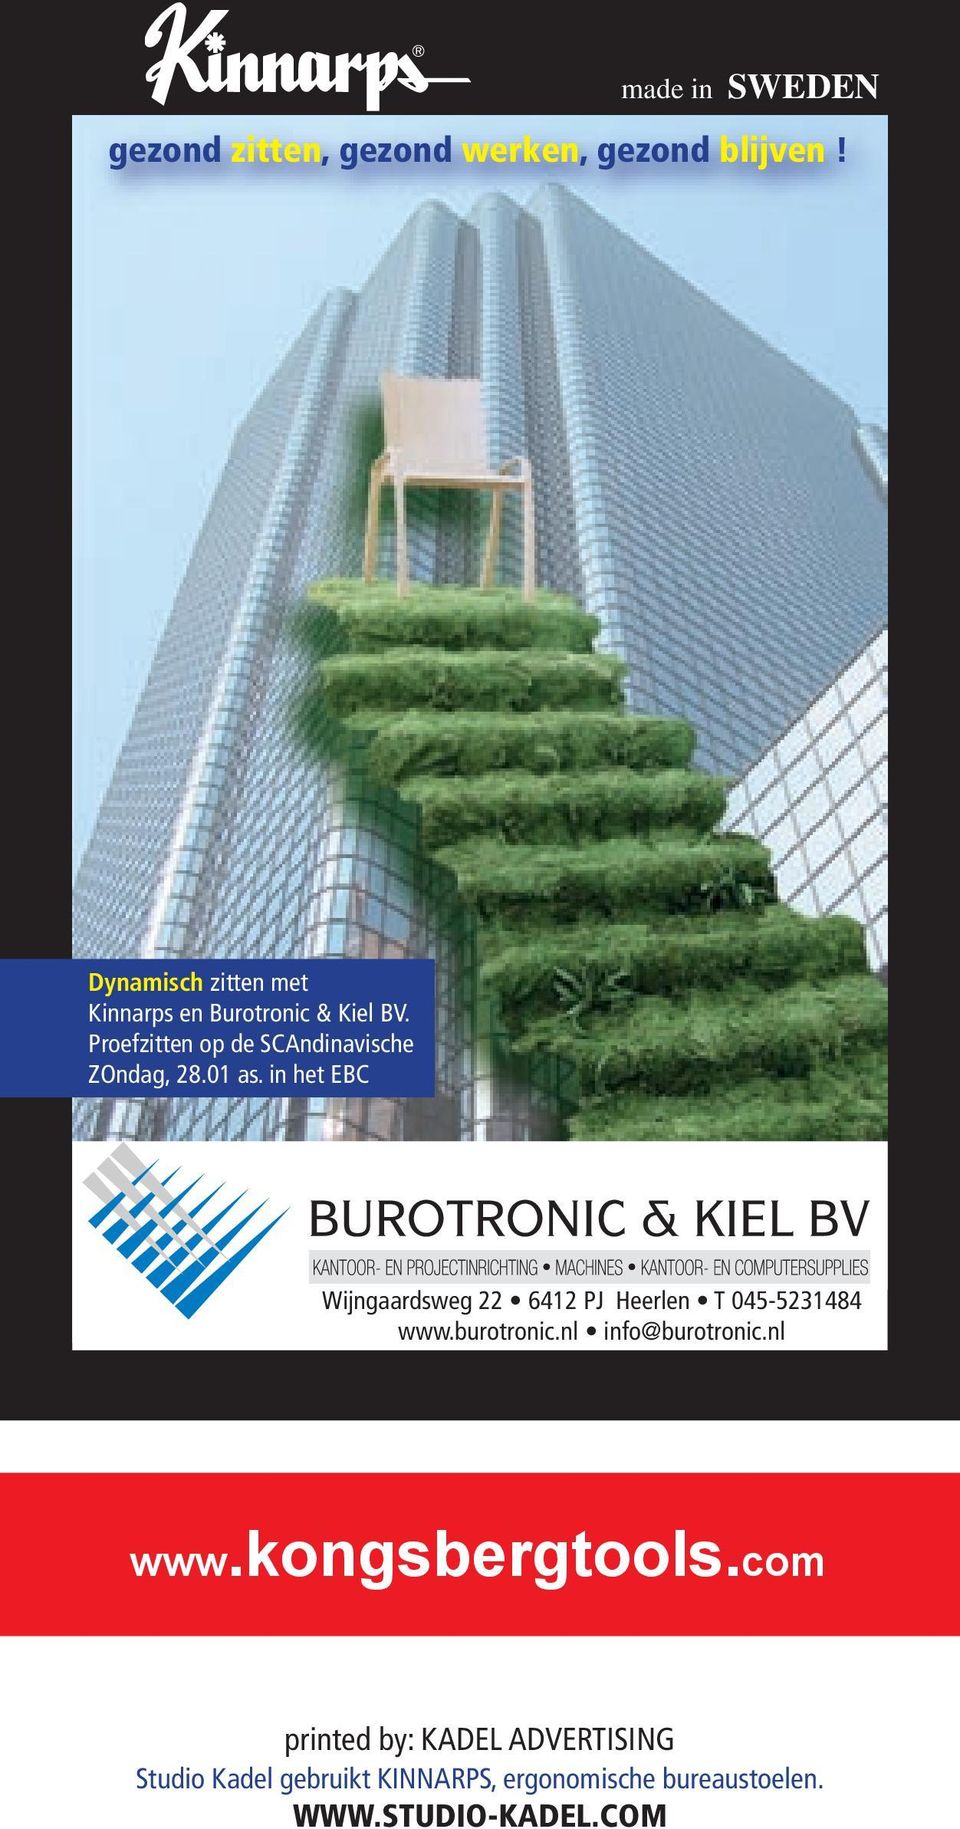 01 as. in het EBC Wijngaardsweg 22 6412 PJ Heerlen T 045-5231484 www.burotronic.nl info@burotronic.